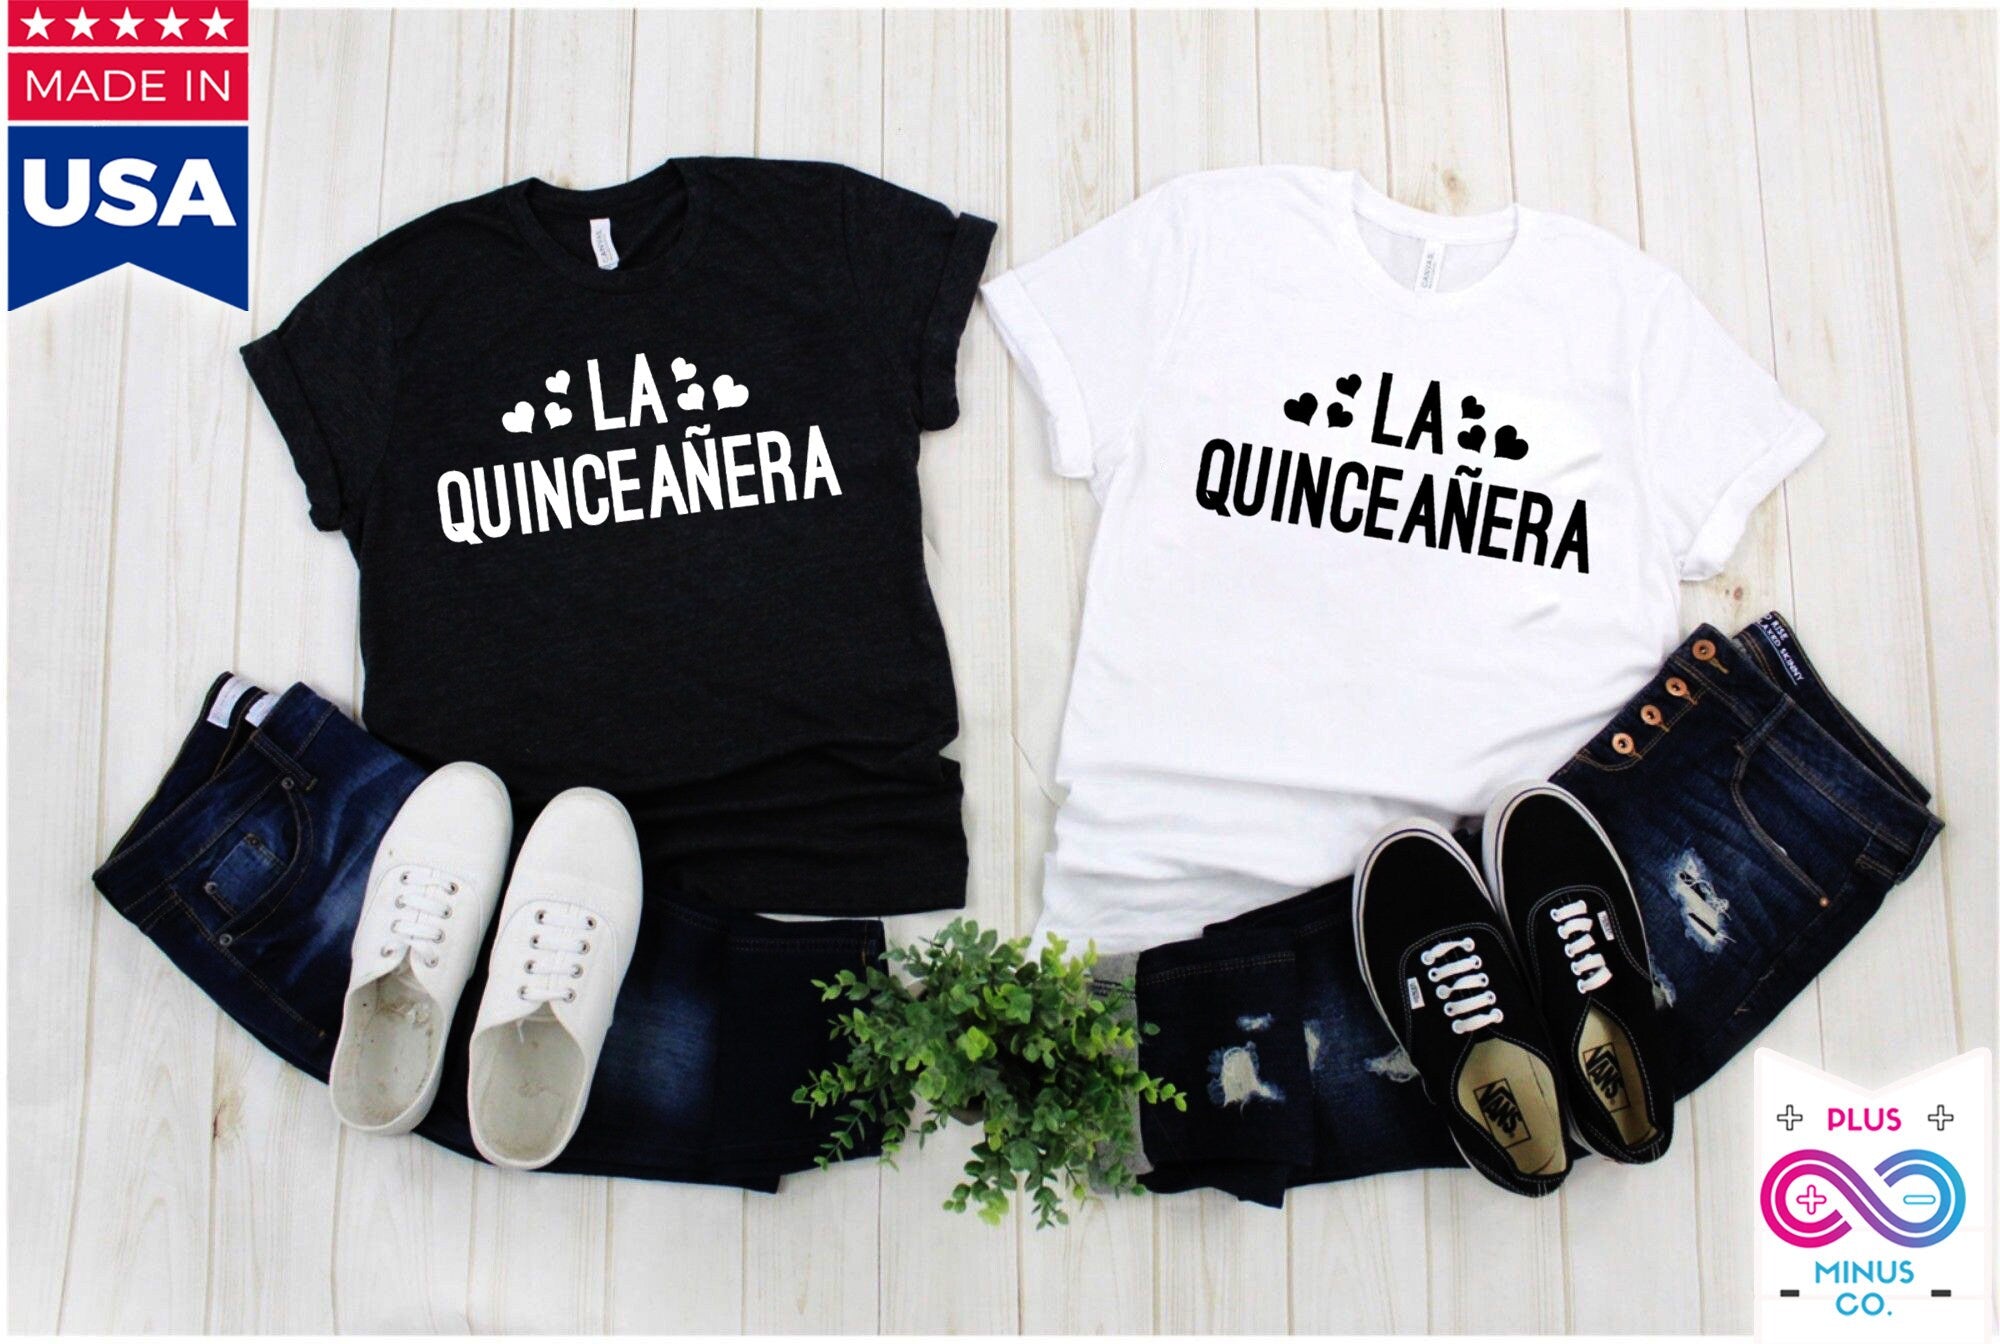 La Quinceañera Latina spanyol pólók, mexikói ing Quinceanera Gift Rehersal Party Outfit, Quince Anos Party birsalma ingek - plusminusco.com